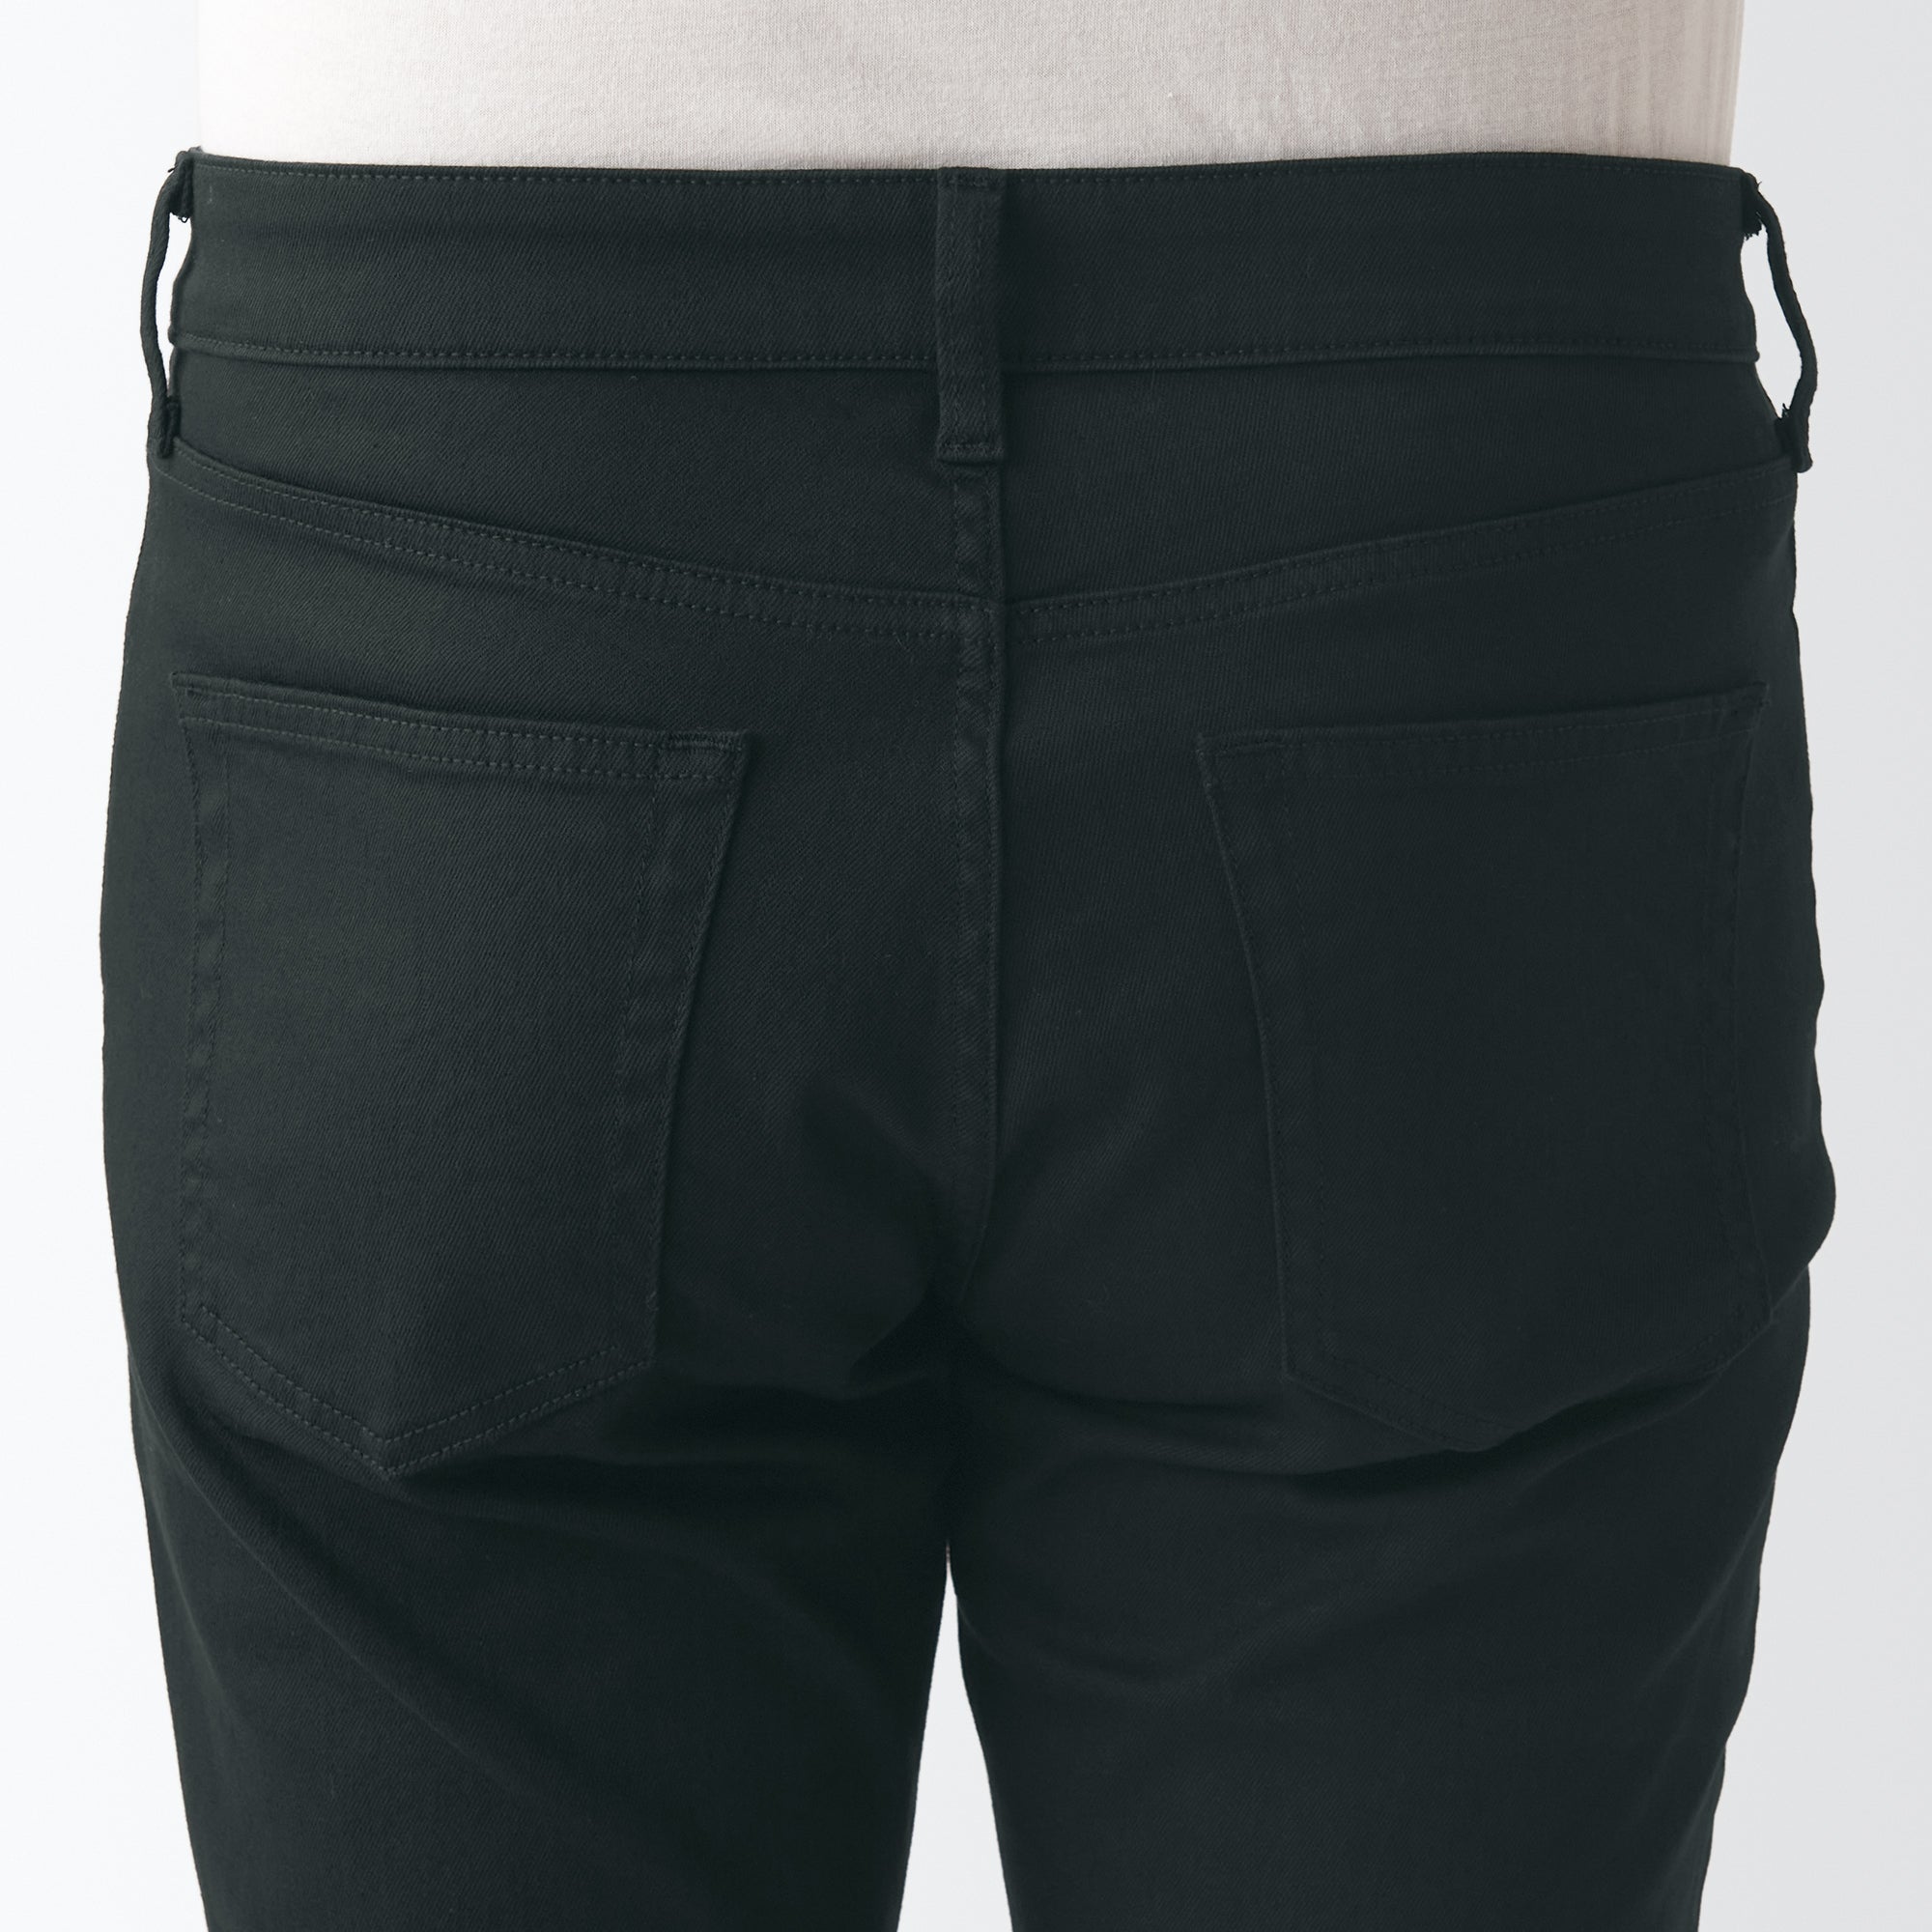 Men's Super Stretch Denim Skinny Pants Black (L 32inch / 82cm